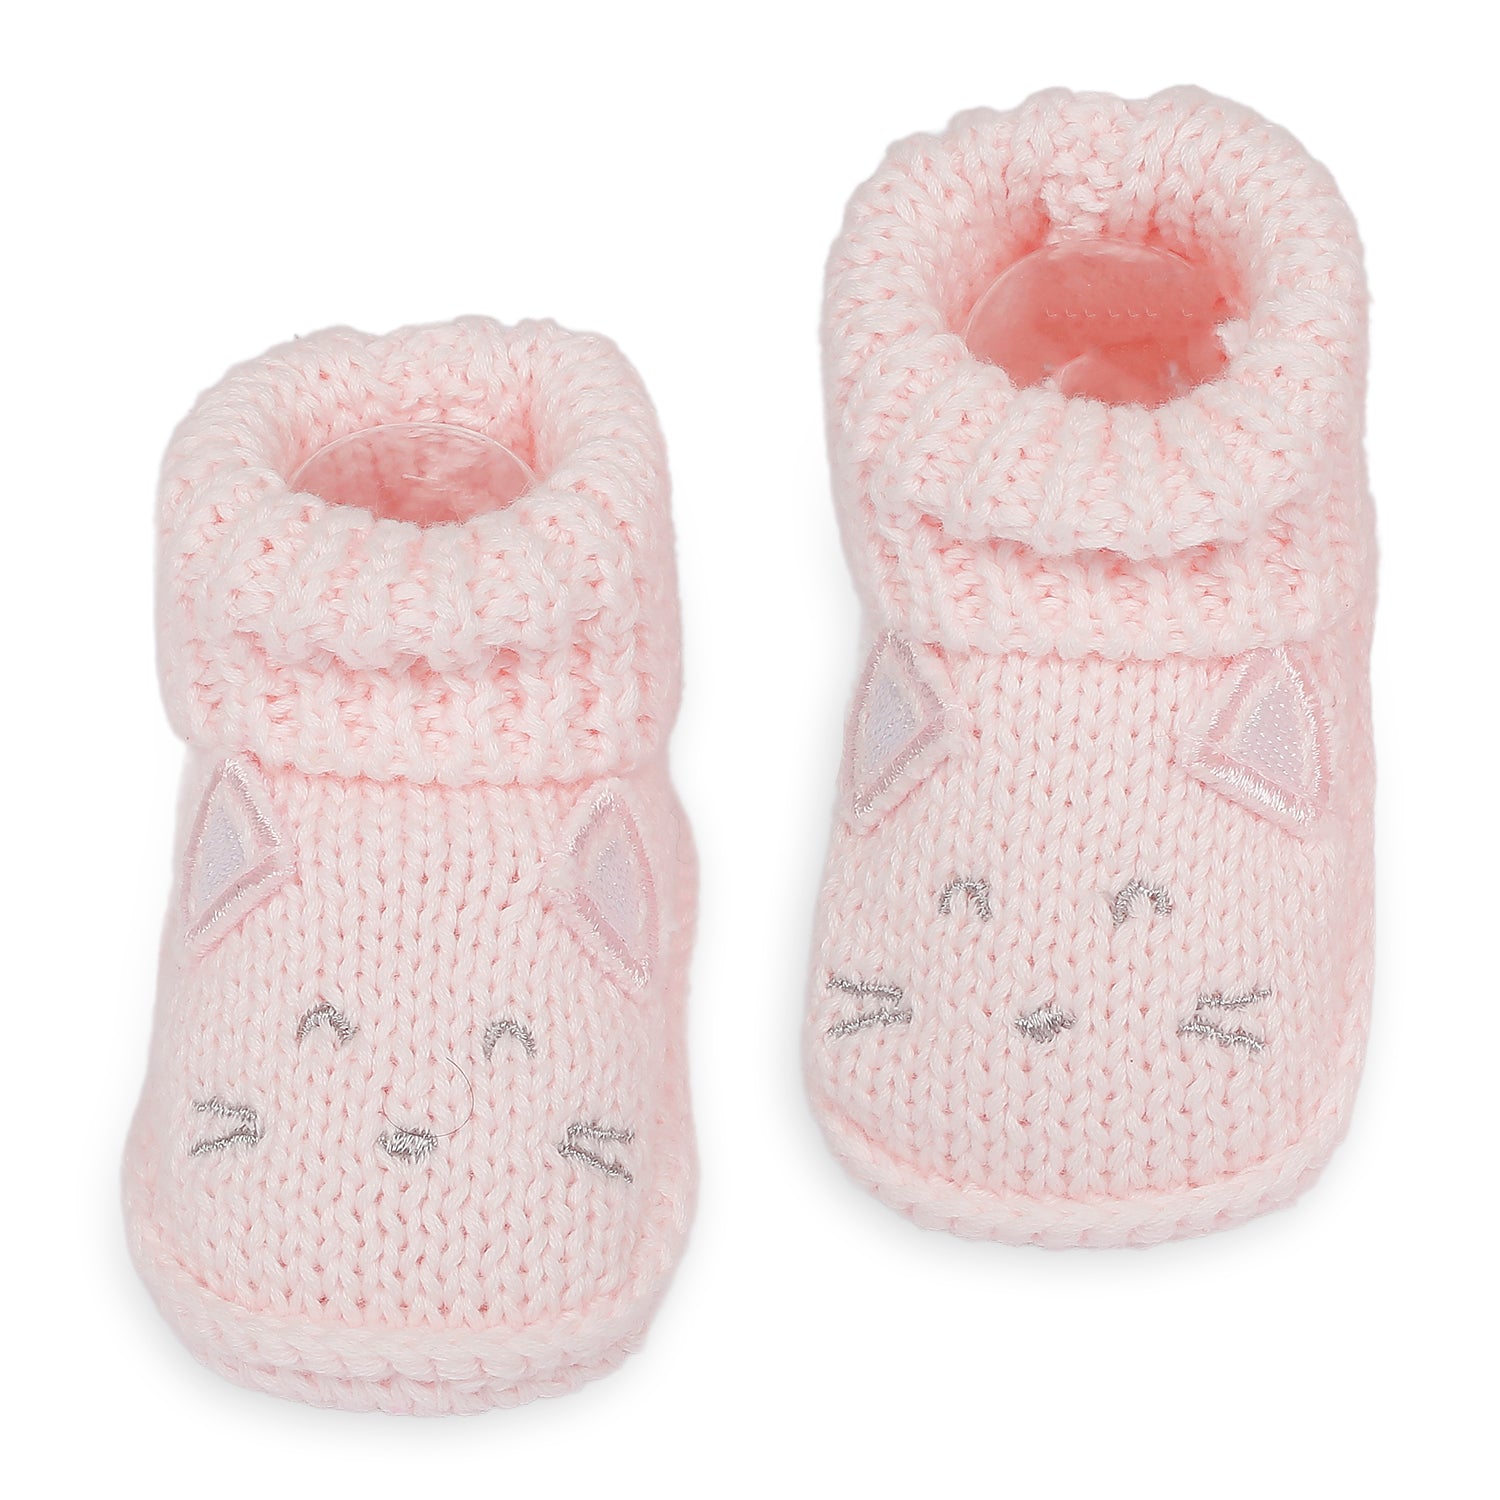 Blushing Kitty Newborn Crochet Socks Booties - Pink